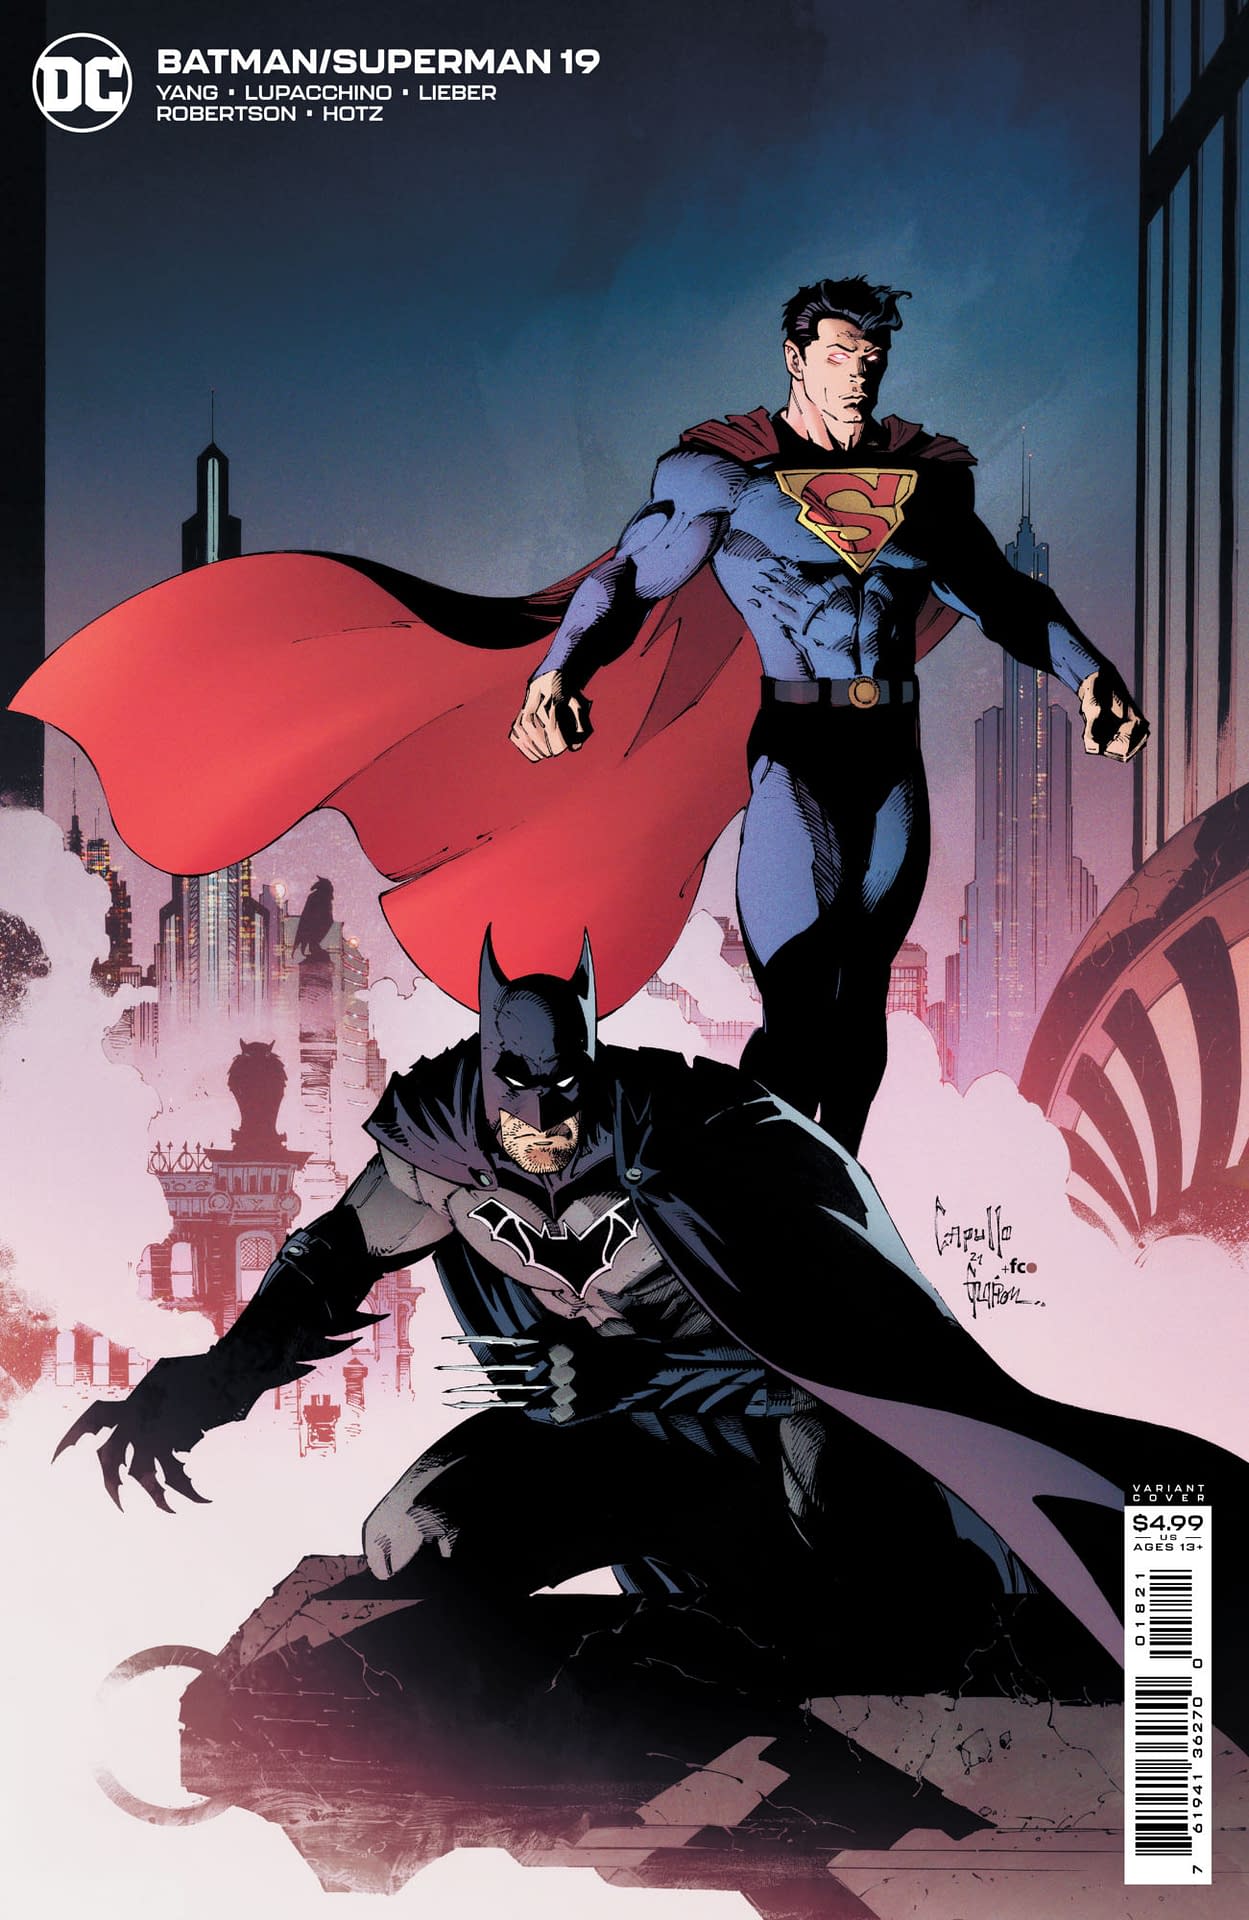 A Massive Temper Tantrum Ensues in Batman Superman #19 [Preview]